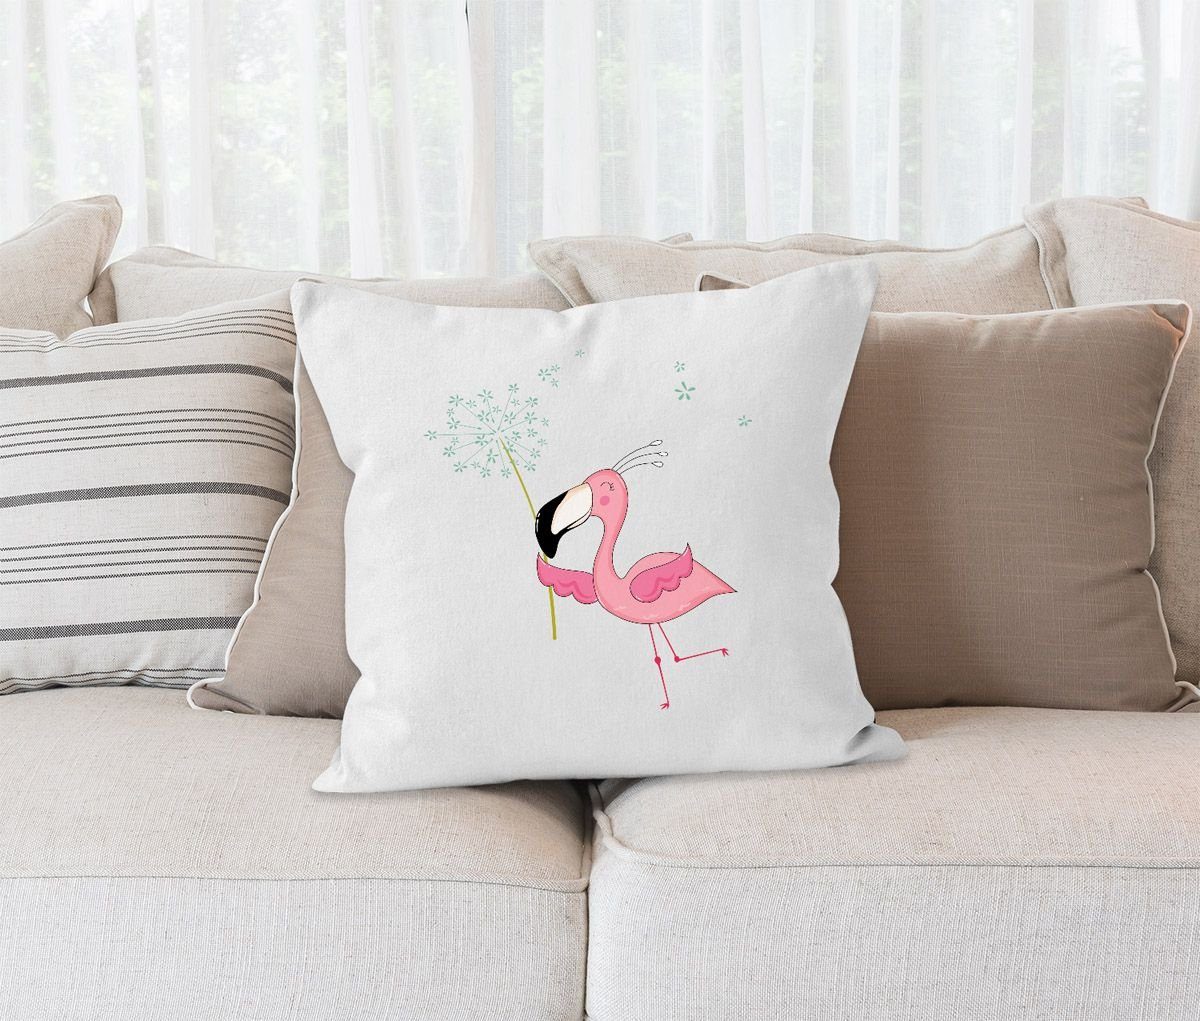 MoonWorks Dekokissen Kissen-Bezug MoonWorks® Dandelion Deko-Kissen Baumwolle Kissen-Hülle weiß Pusteblume Flamingo